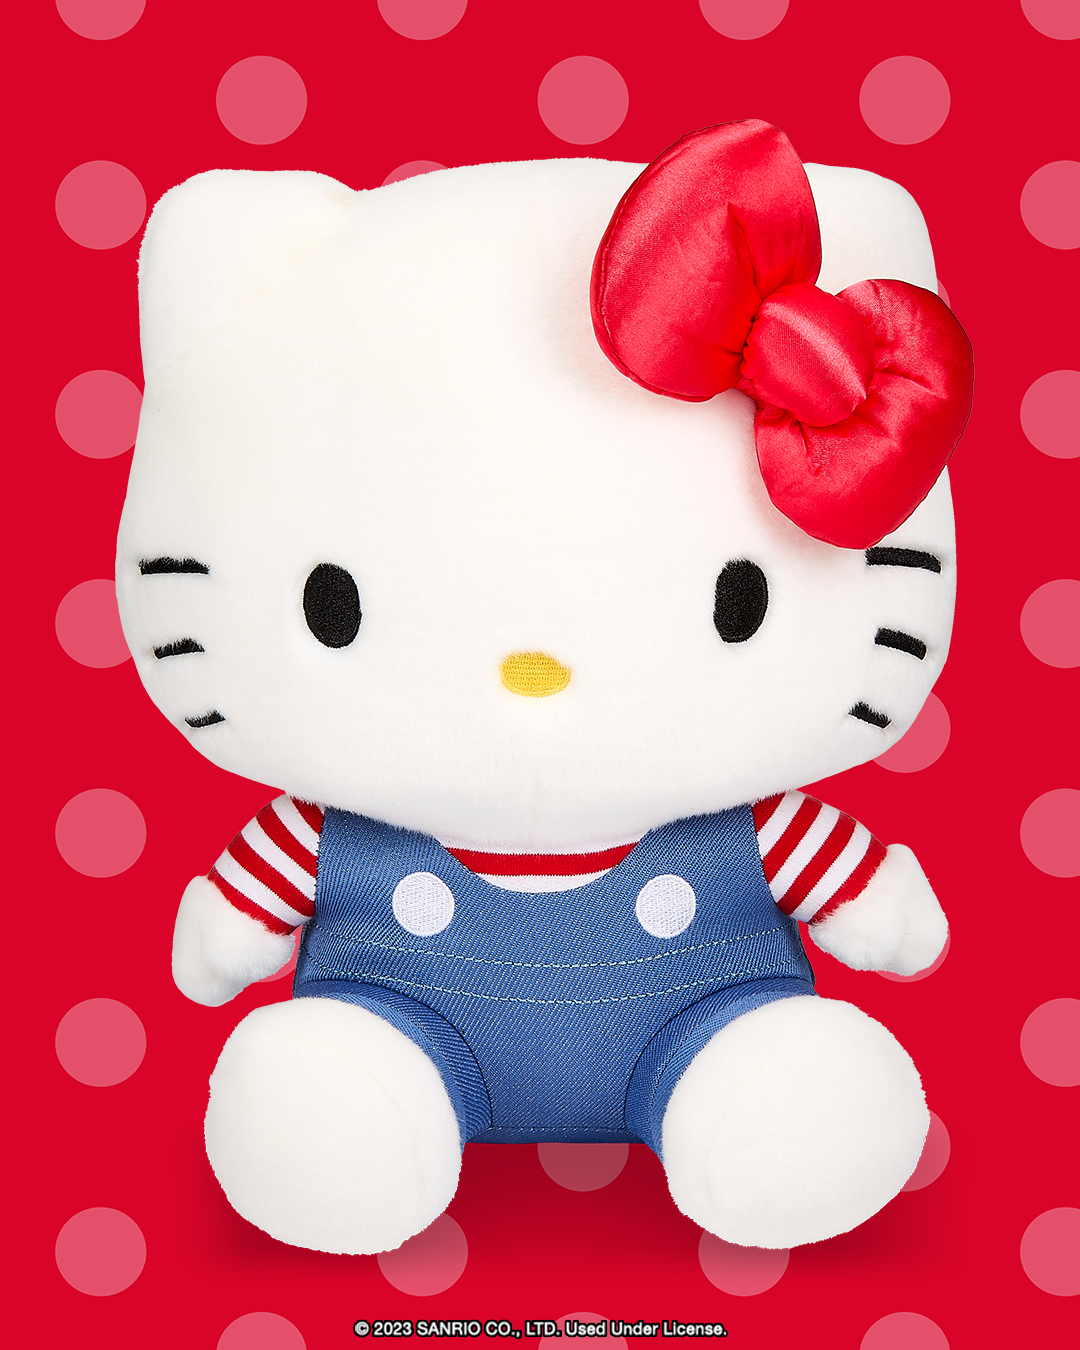 Hello Kitty Plush Toys and Stuffed Animals designed by Kidrobot